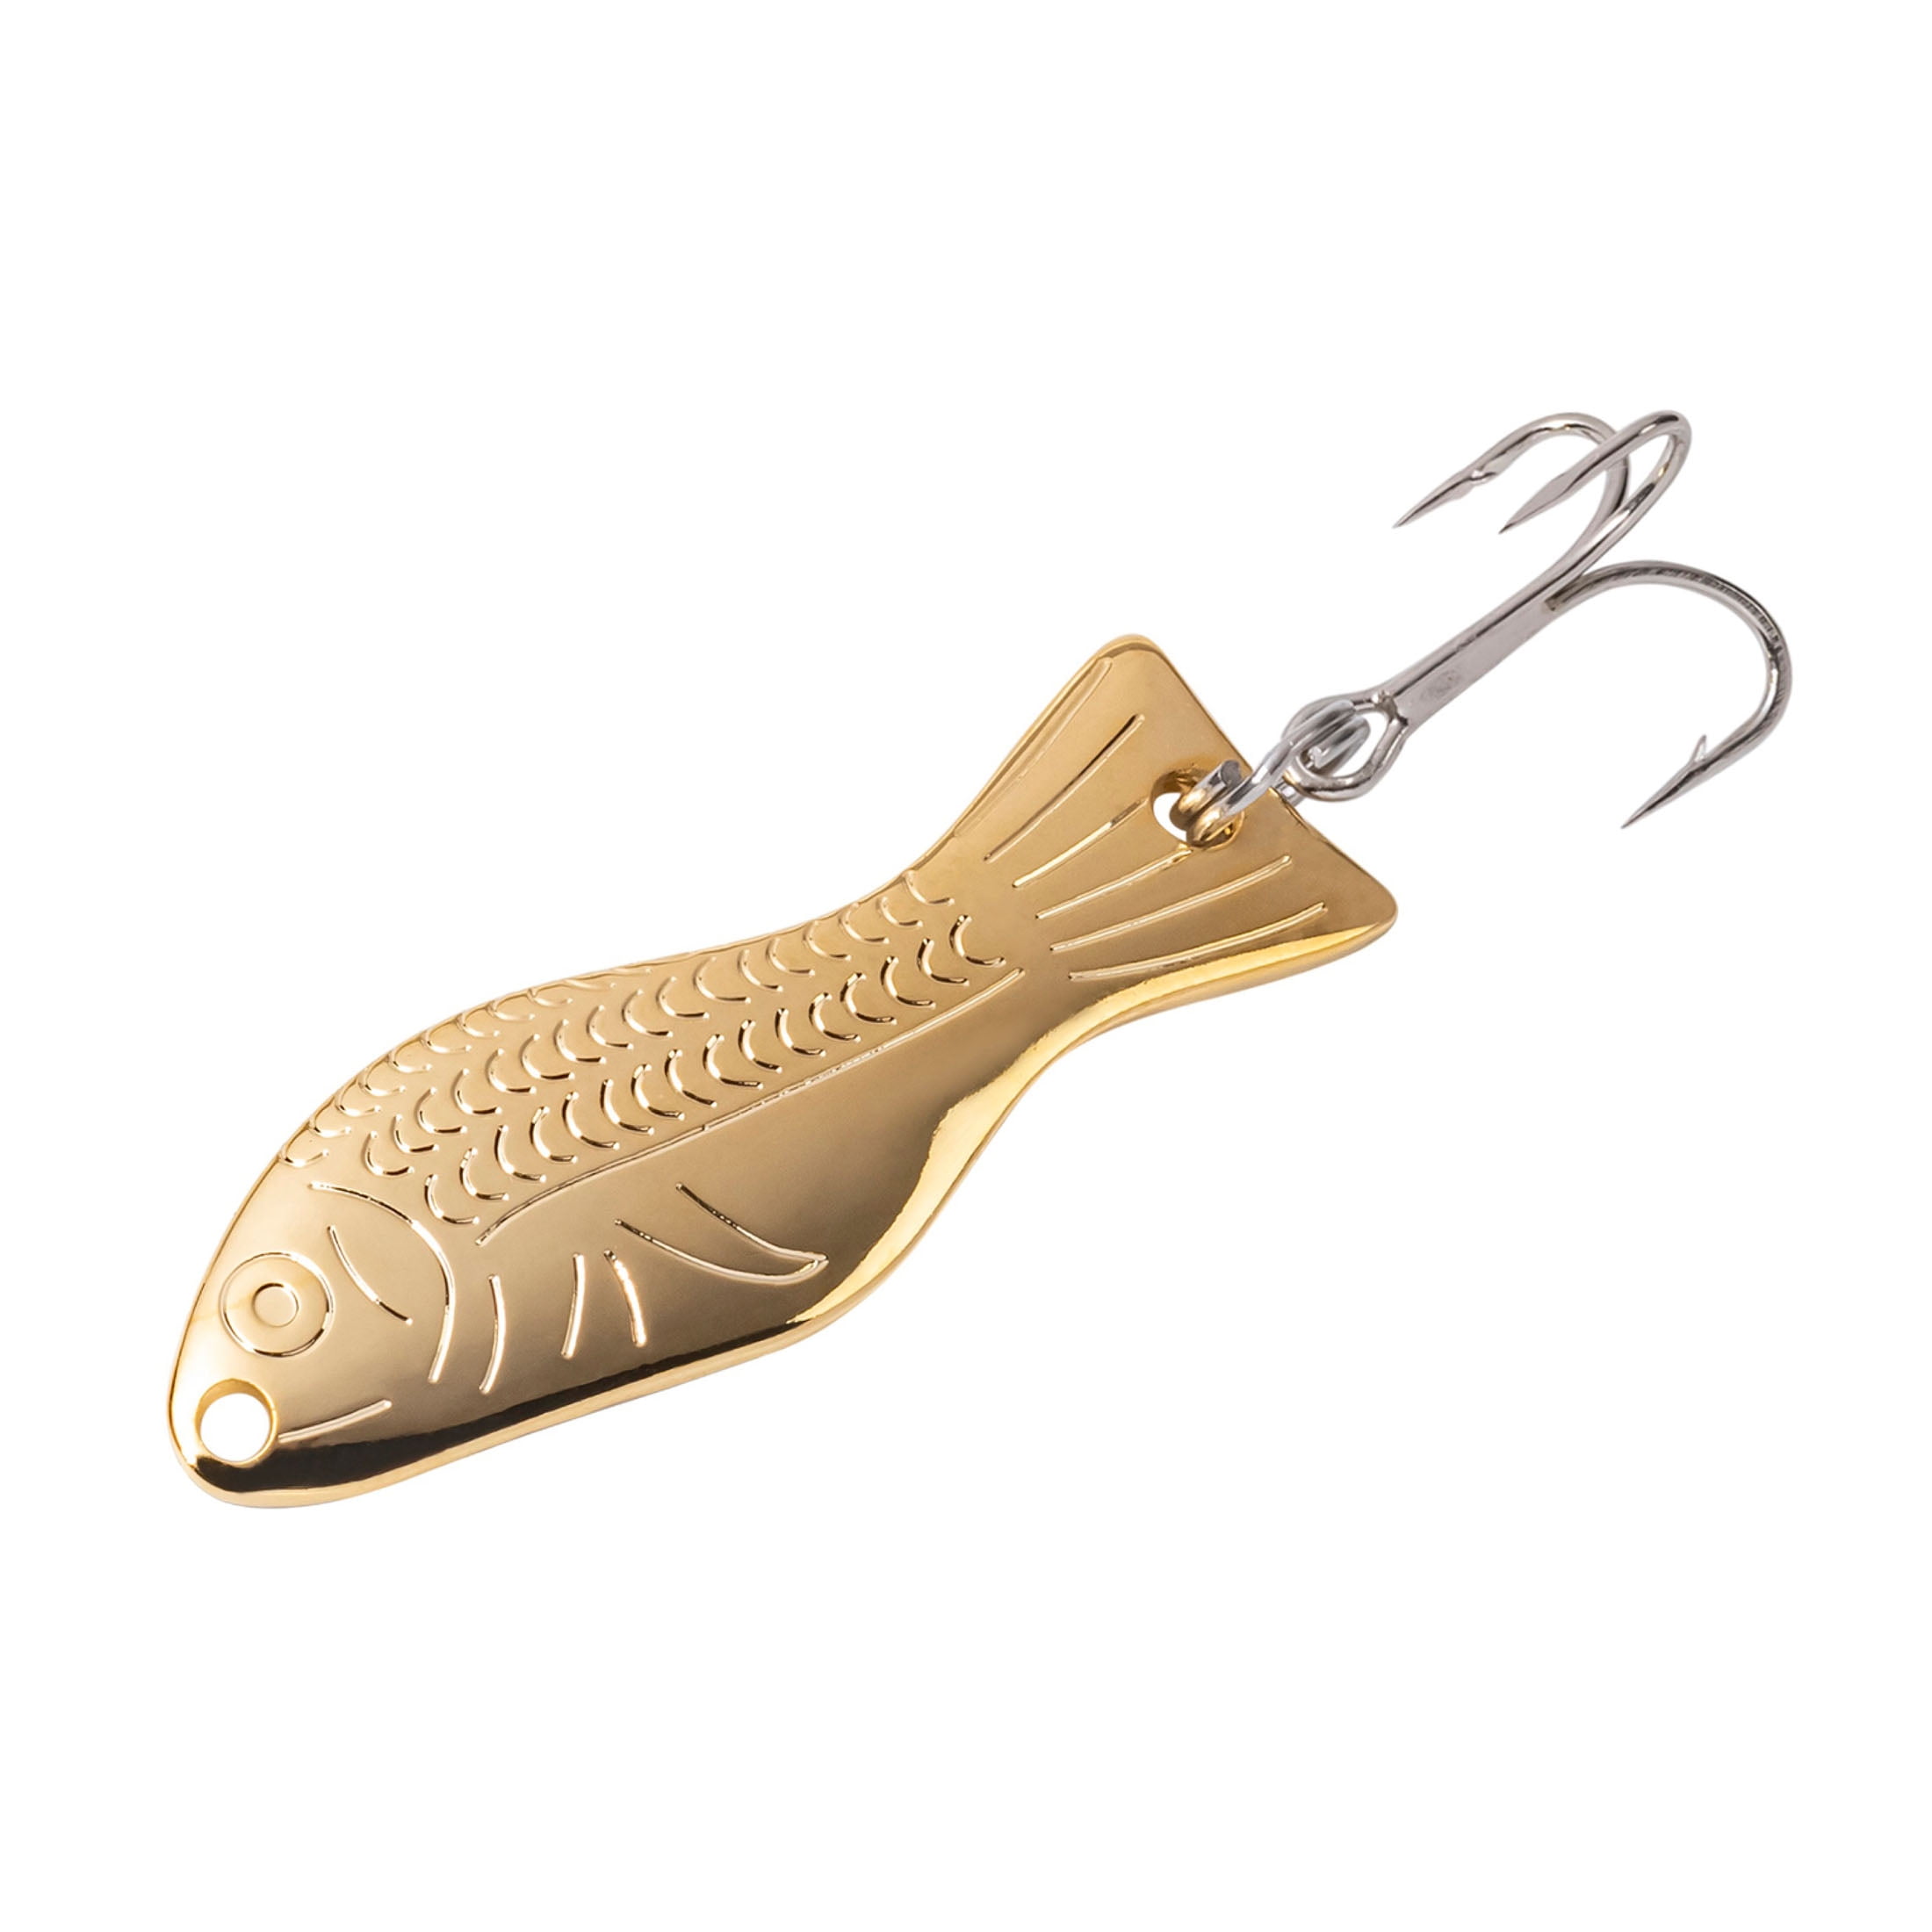 Al's Goldfish - G100 3/16 oz. Gold Fishing Lure - Spoon